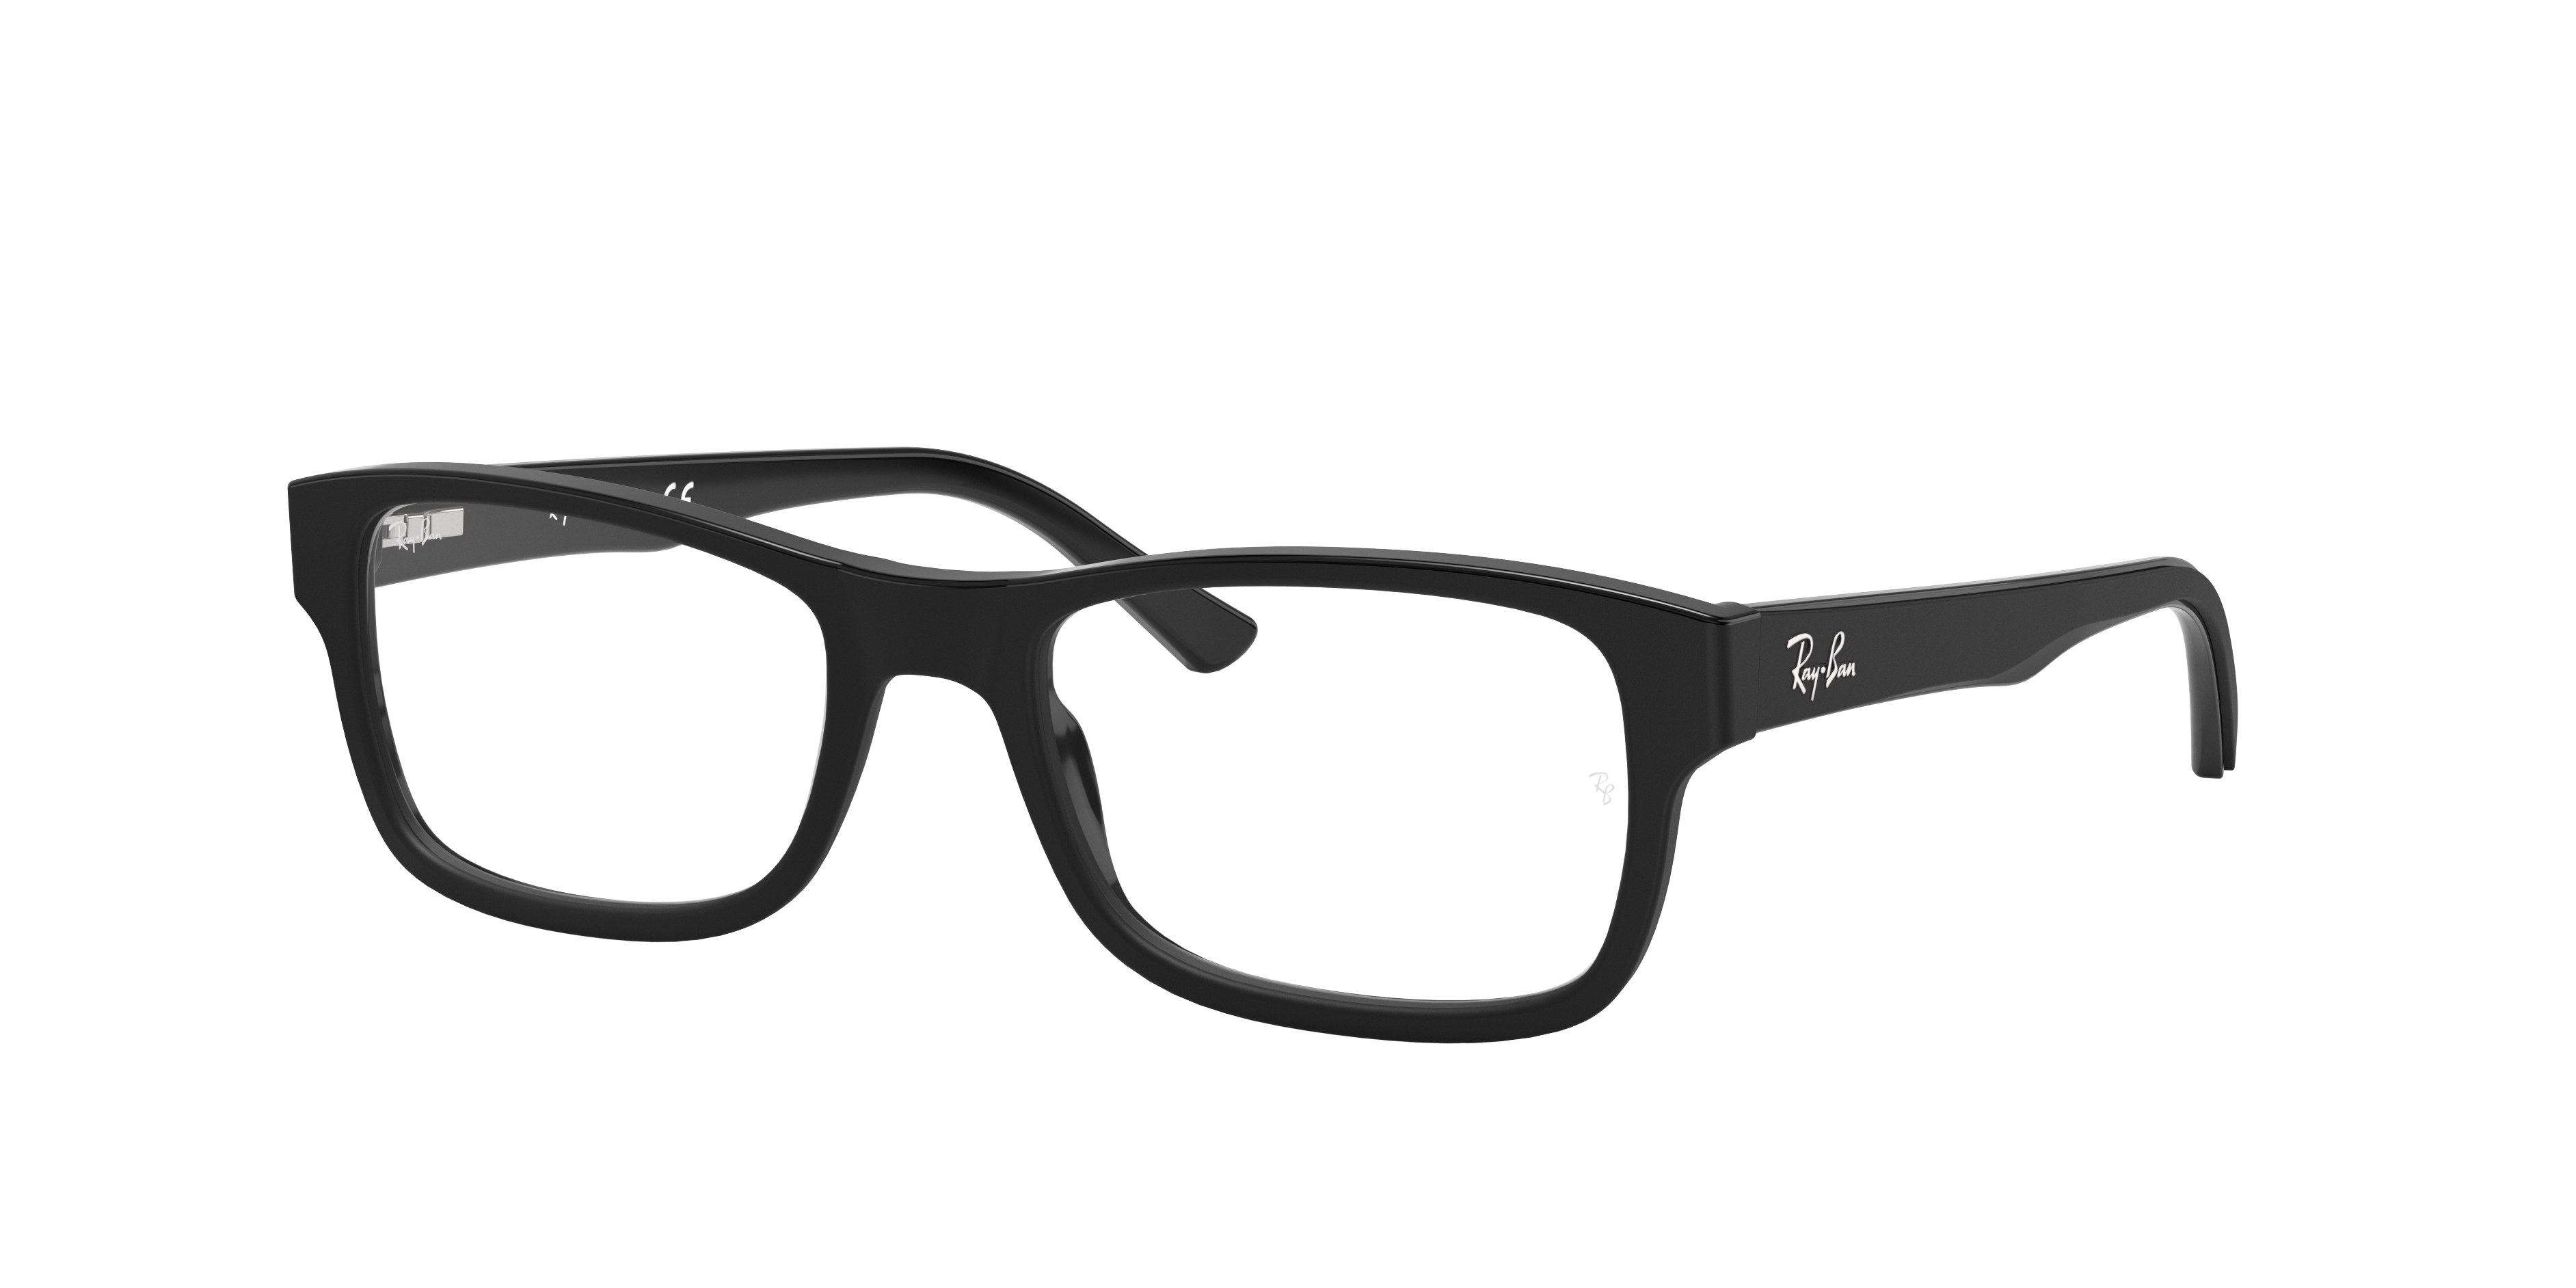 Rb5268 Eyeglasses with Black Frame | Ray-Ban®